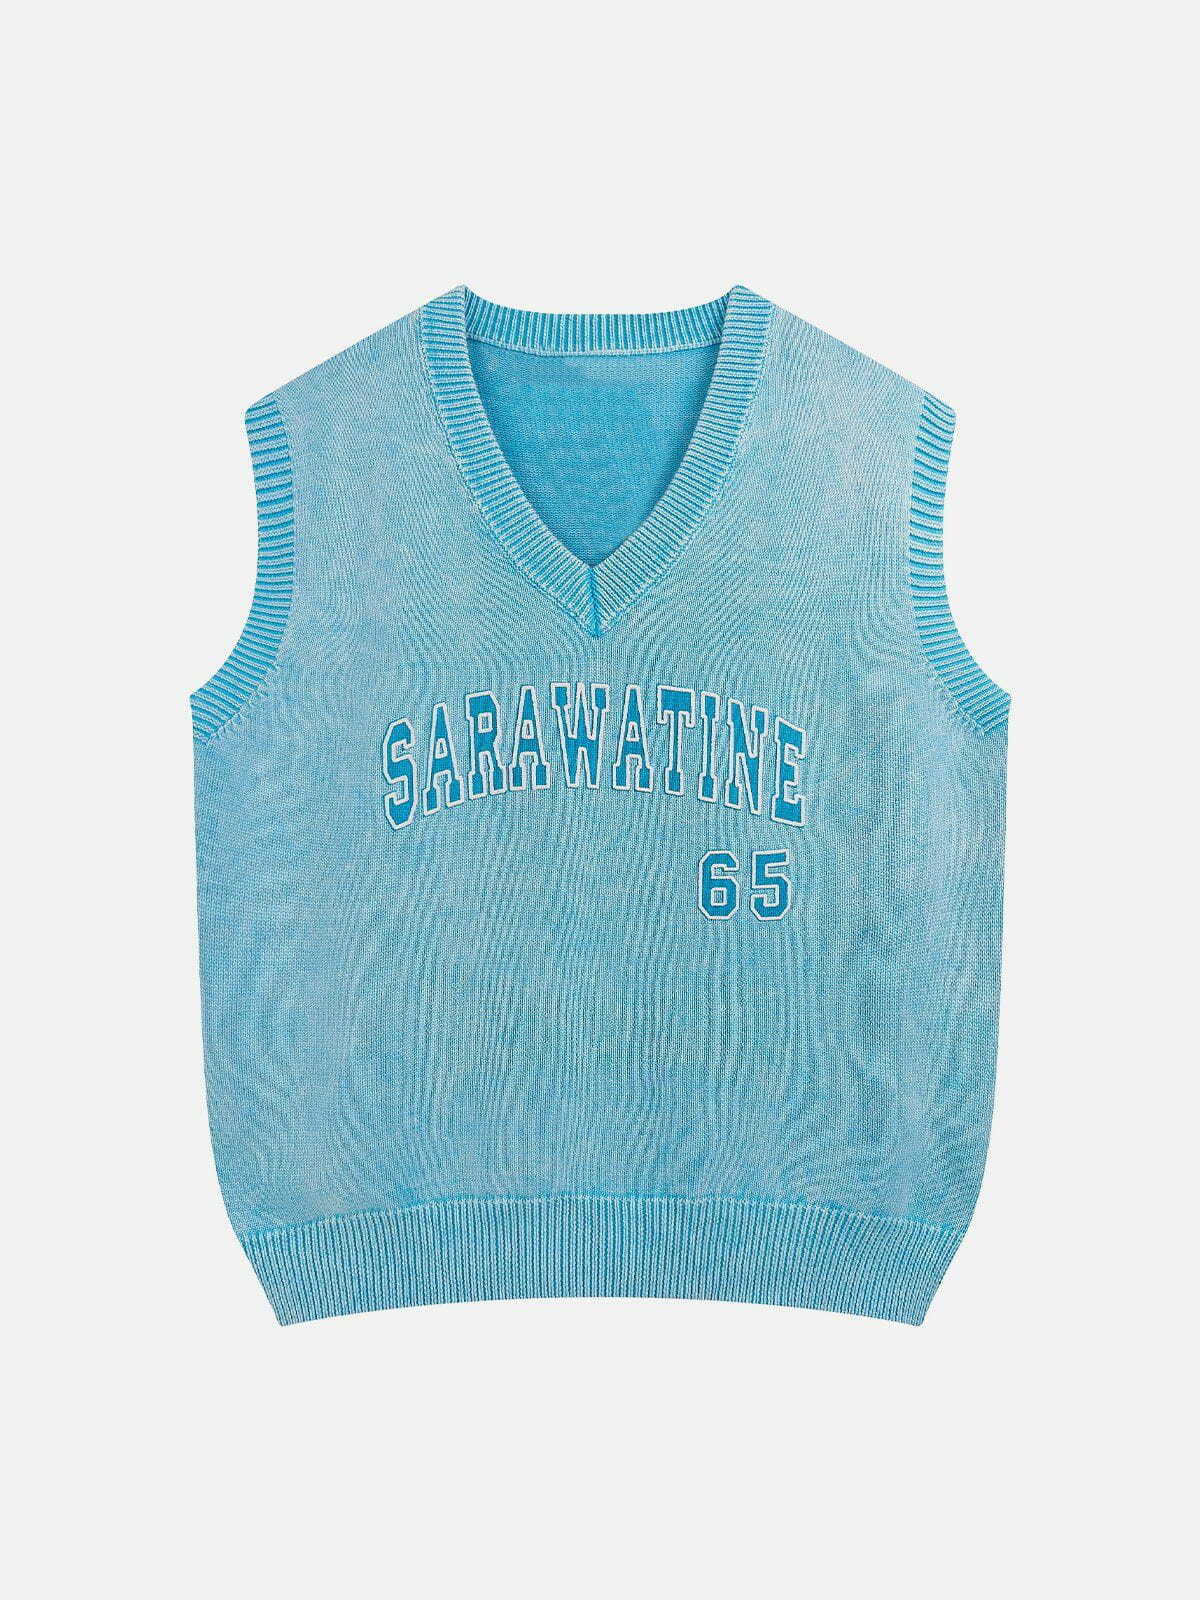 embroidered letter sweater vest y2k streetwear essential 5271